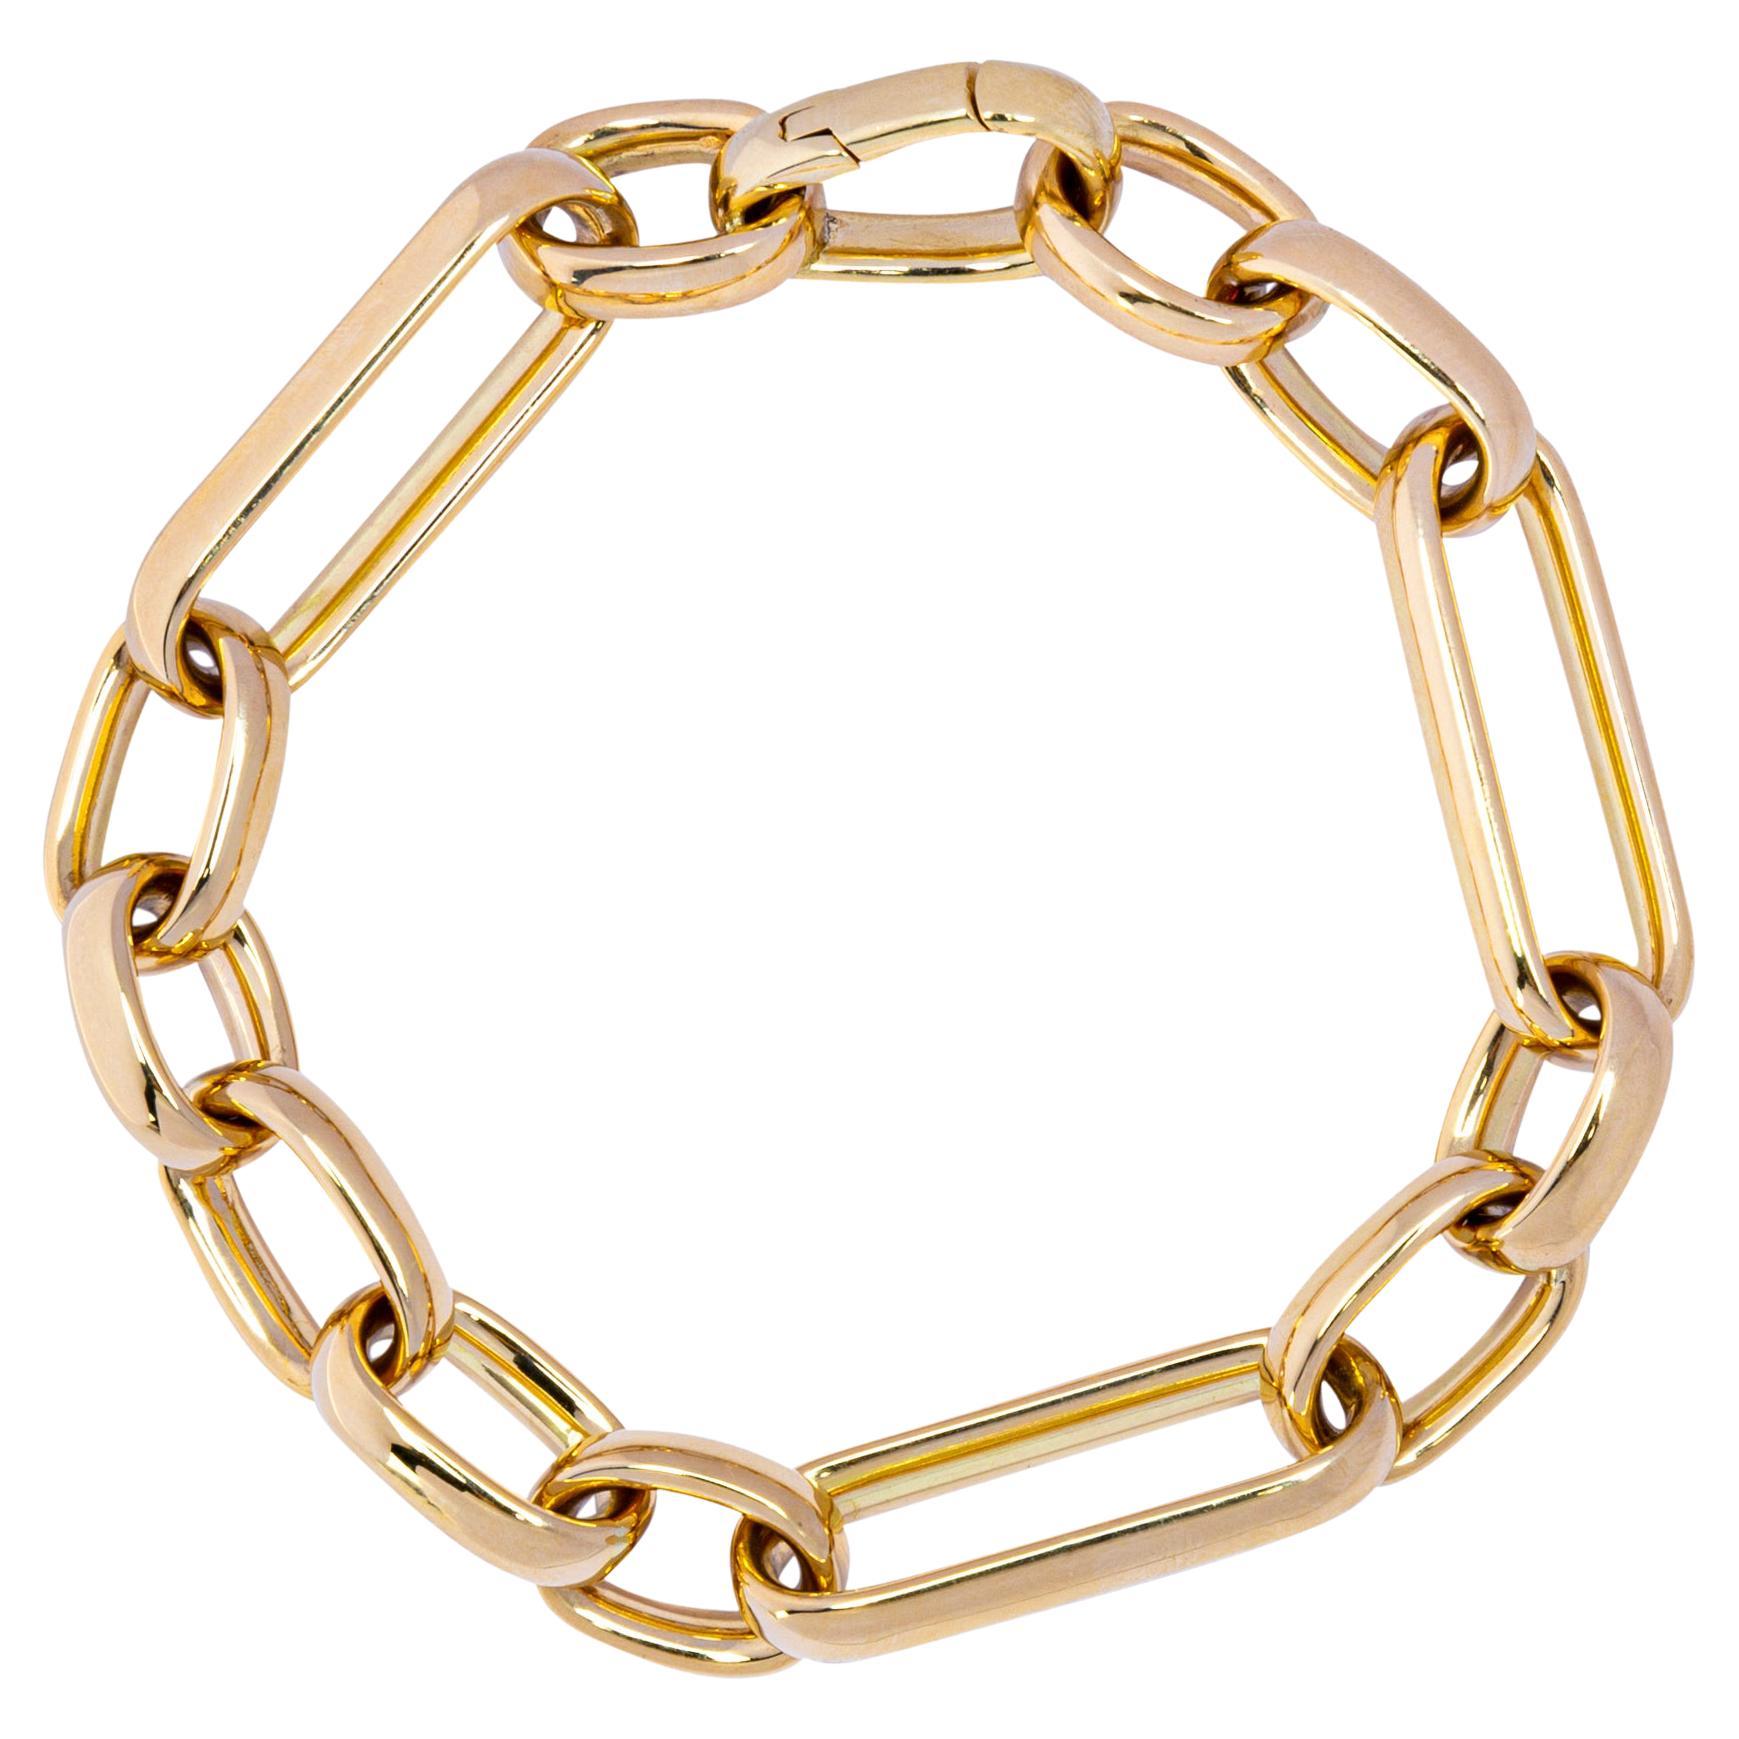 Alex Jona 18 Karat Yellow Gold Link Chain Bracelet